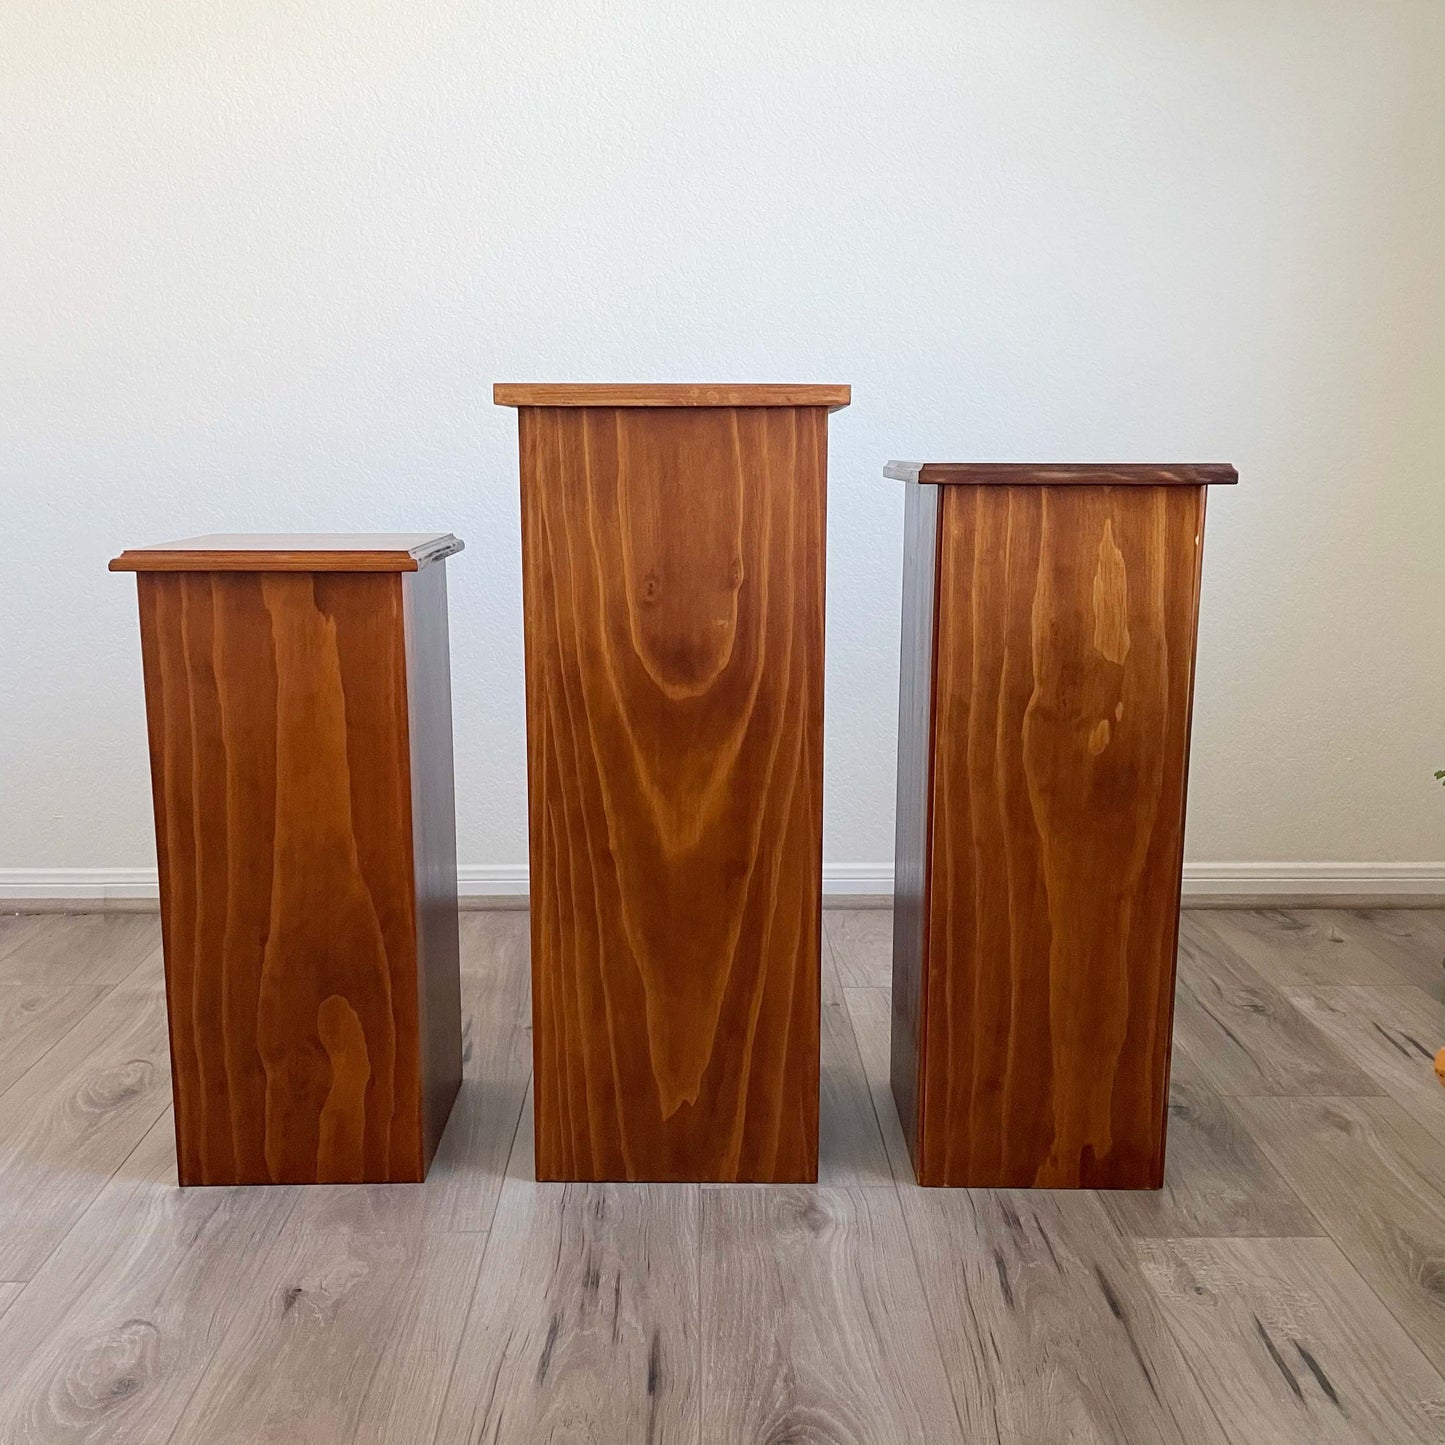 Set of 3 Wooden Pedestals